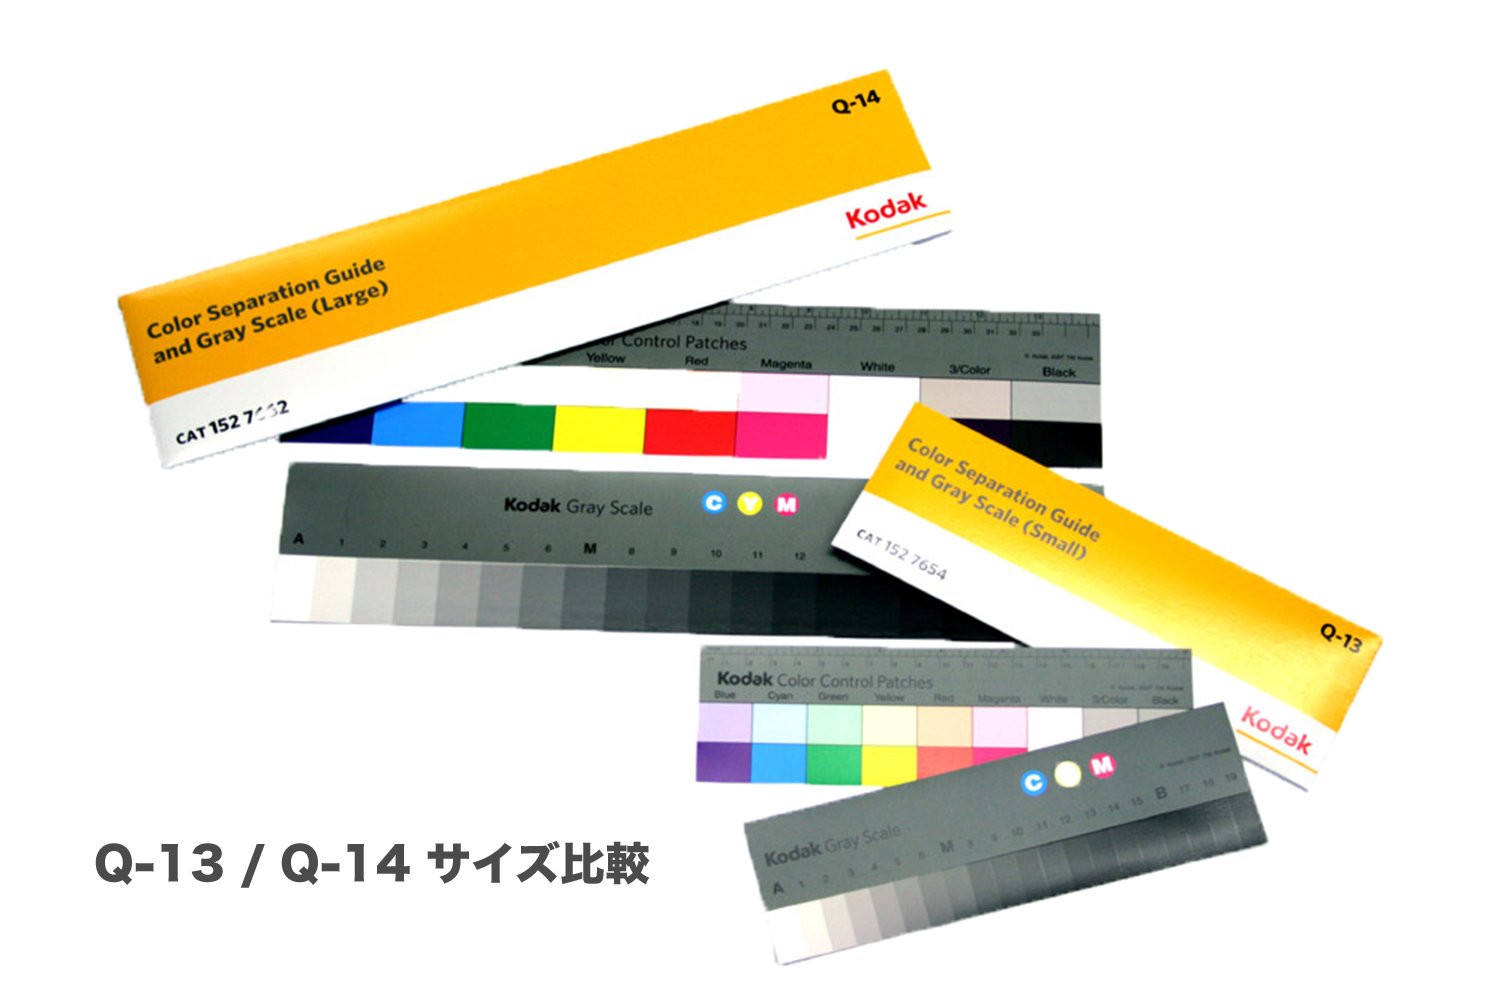 Kodak 1527654 Color Separation Guide & Gray Scale Q-13 8